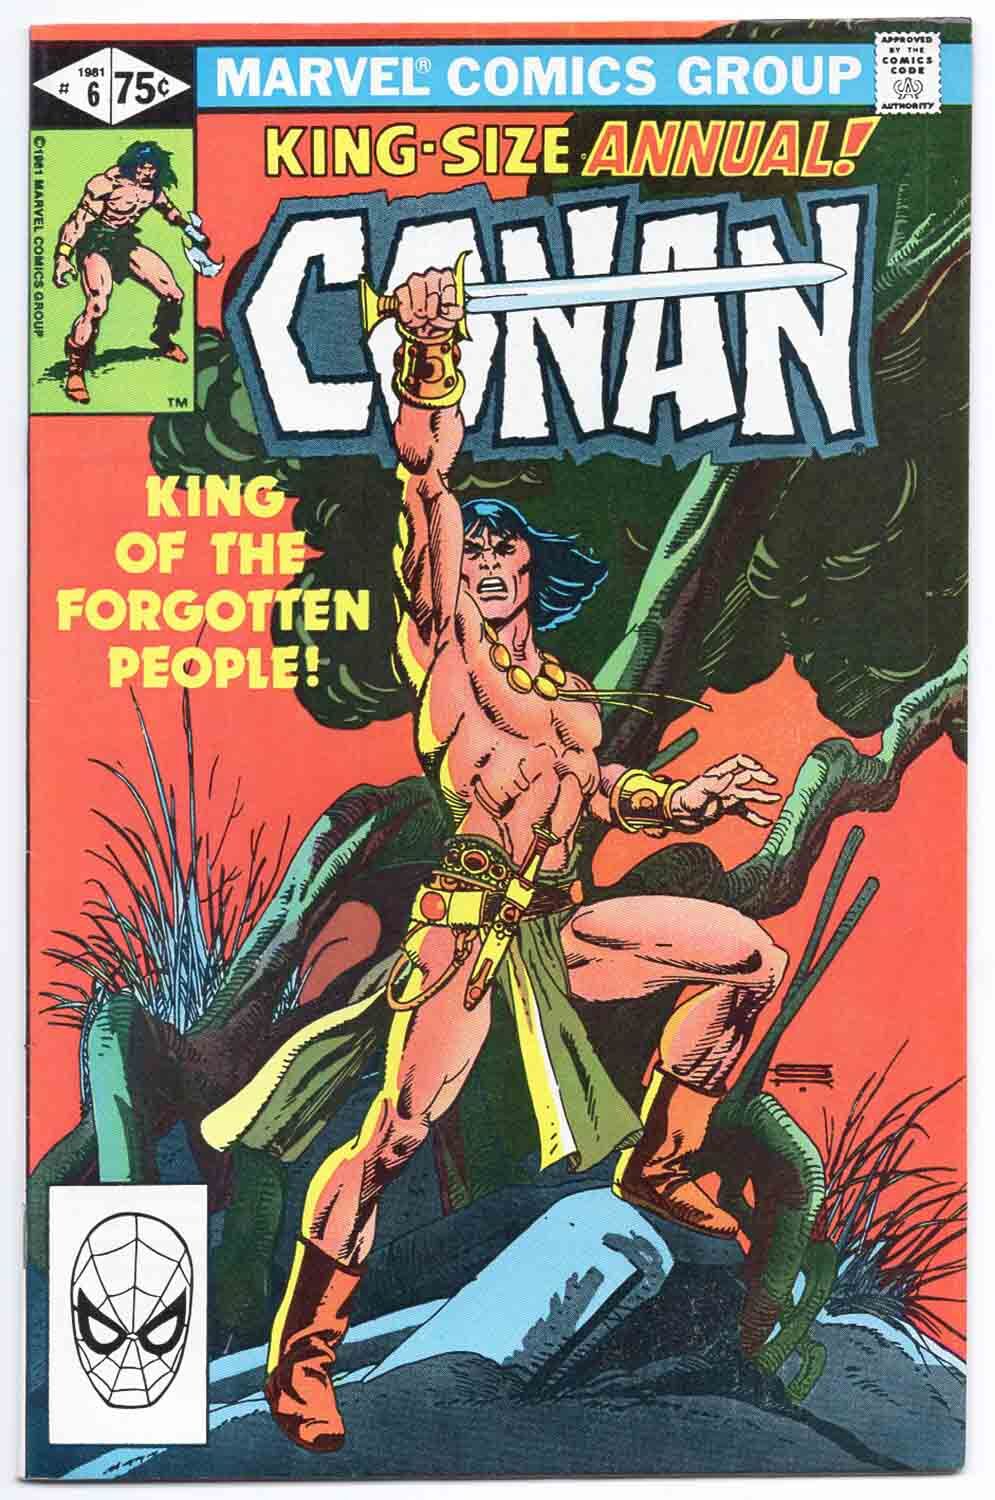 Conan the Barbarian Annual #6